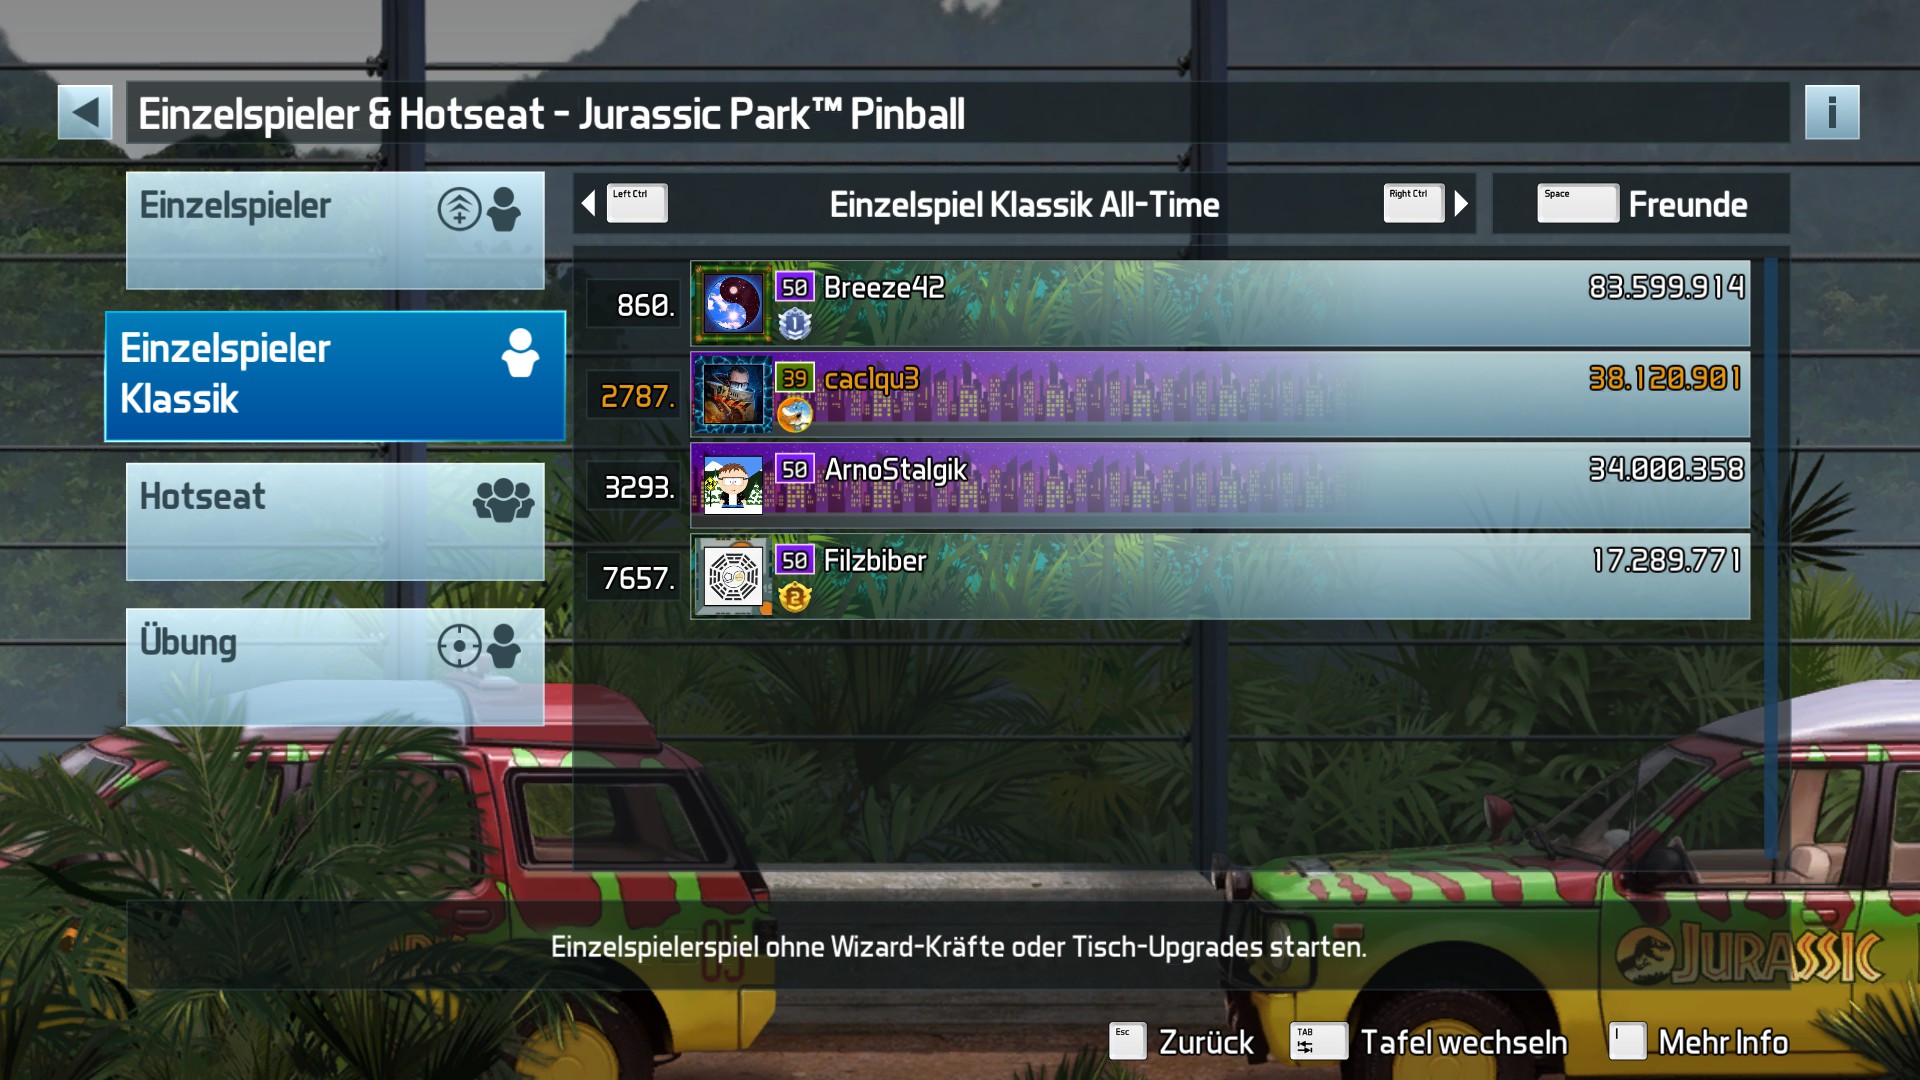 e2e4: Pinball FX3: Jurassic Park Pinball [Classic] (PC) 38,120,901 points on 2022-05-15 18:22:23